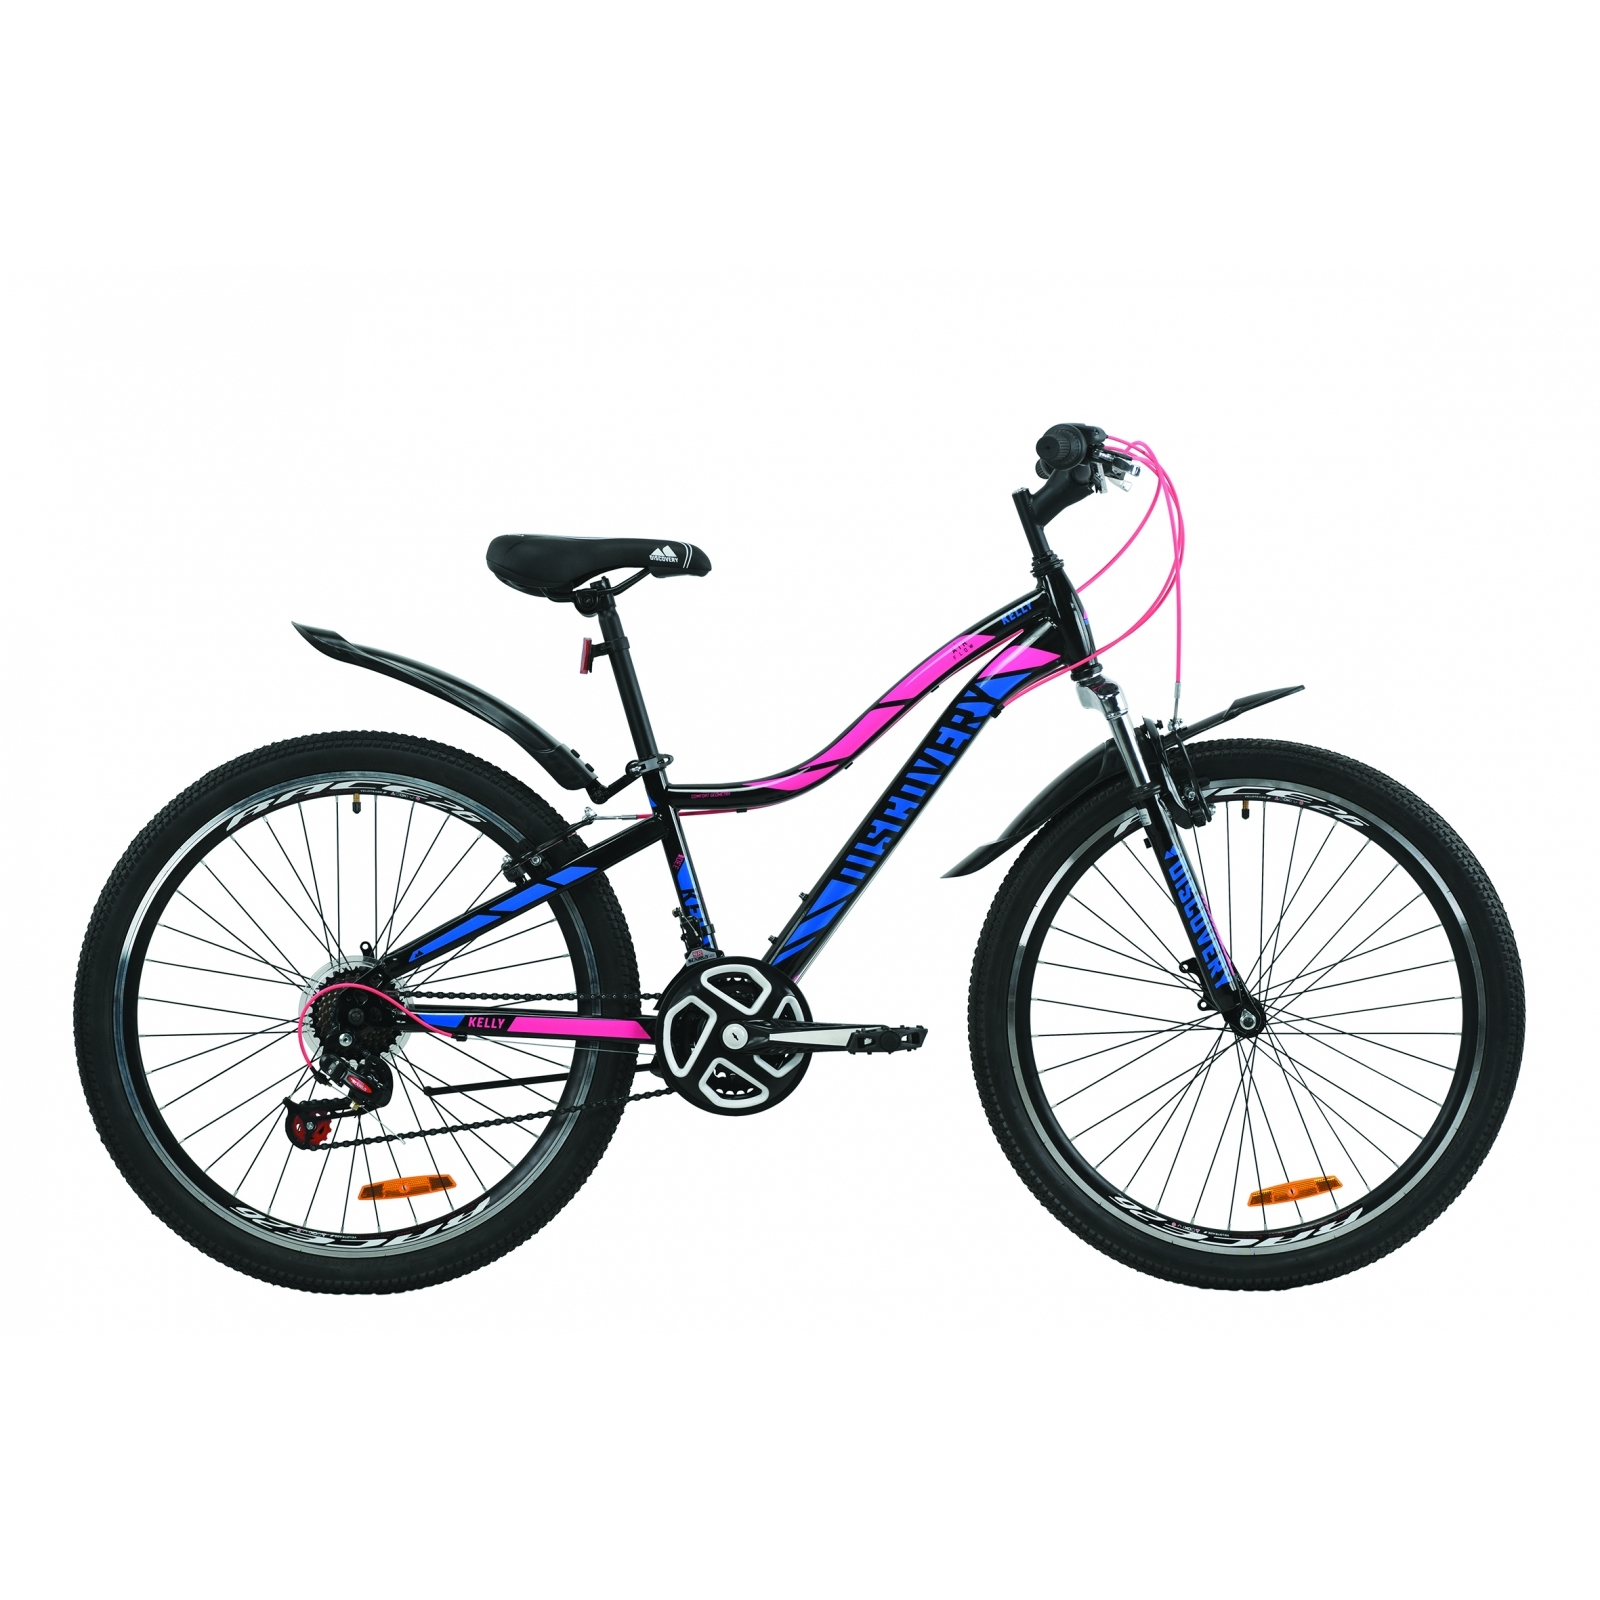 Велосипед Discovery 26" KELLY AM Vbr рама-13,5" St 2020 черно-малиновый с голубы (OPS-DIS-26-248)